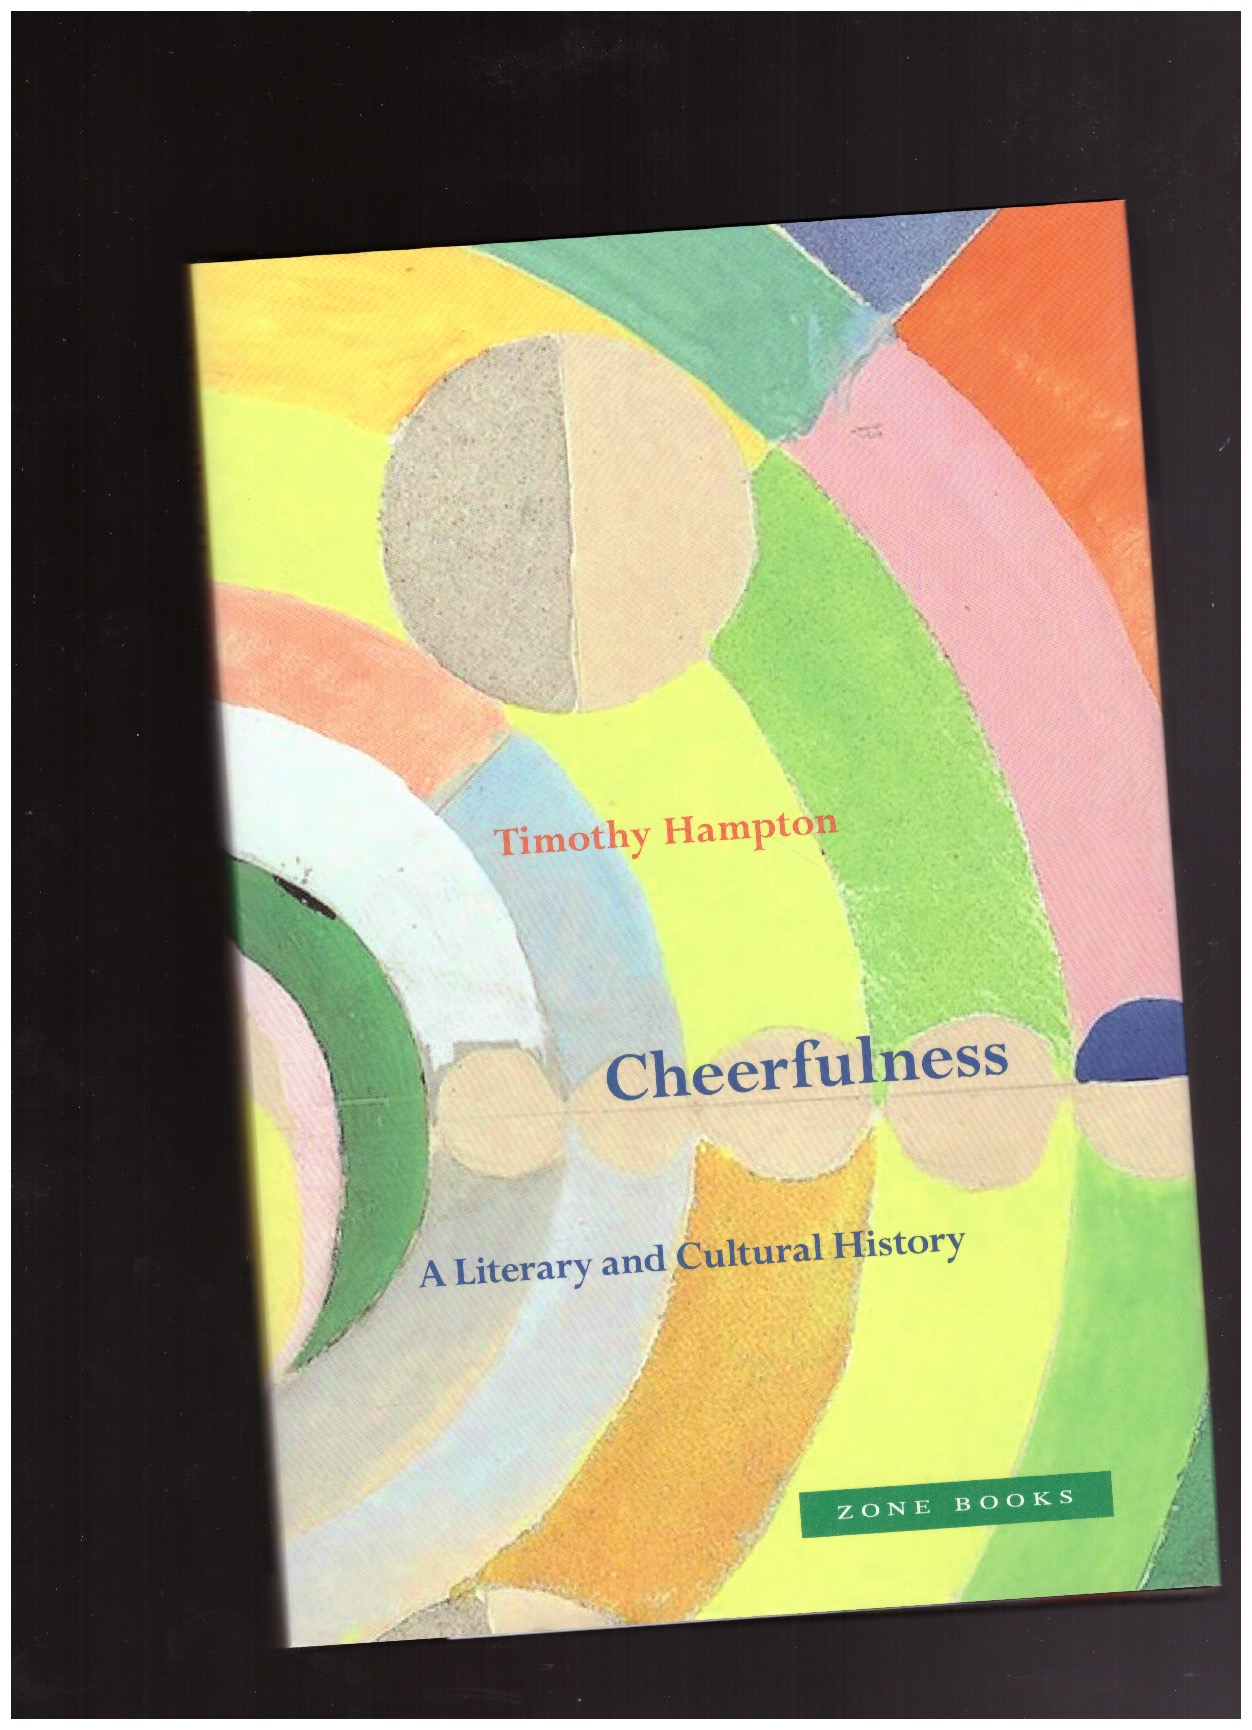 HAMPTON, Timothy - Cheerfulness: A Literary and Cultural History